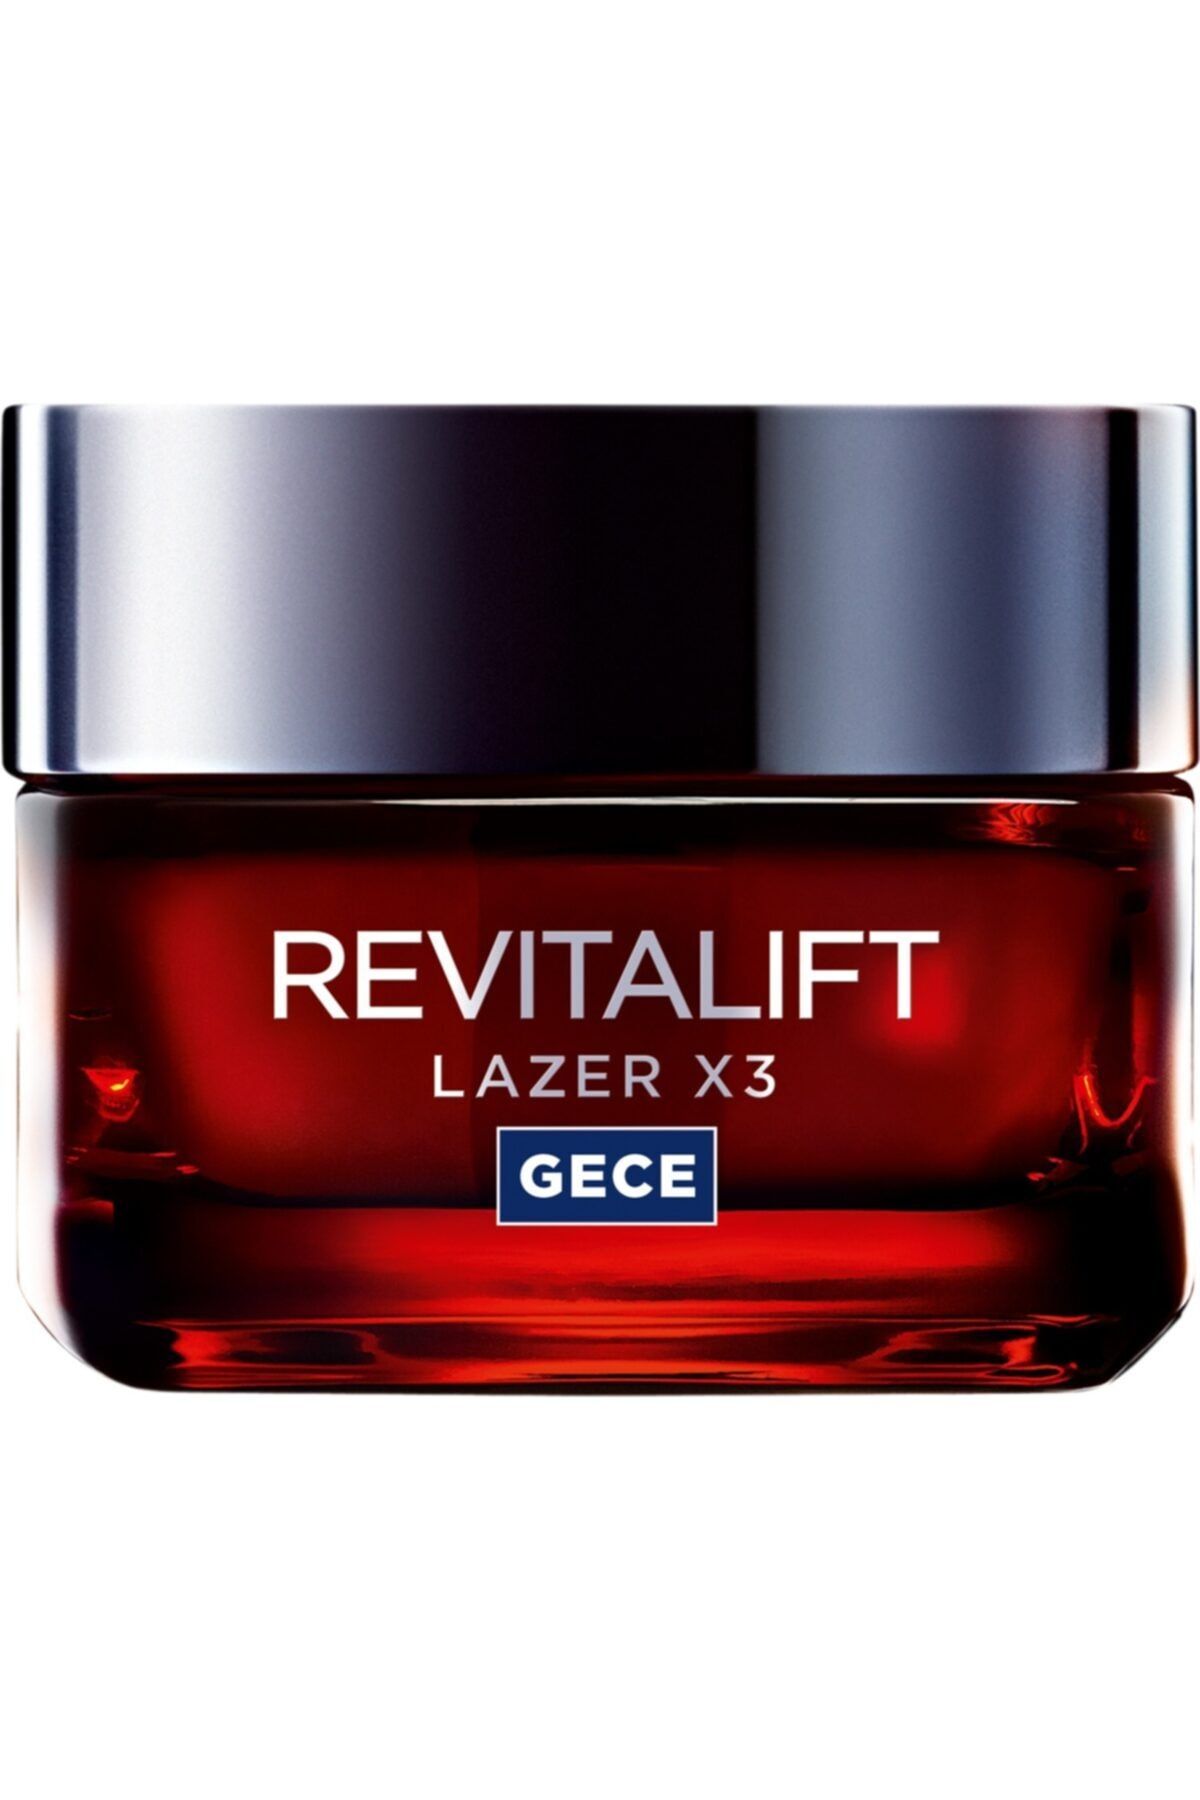 L'Oreal Paris L'oréal Paris Revitalift Lazer x3 Yoğun Yaşlanma Karşıtı Gece Bakım Kremi